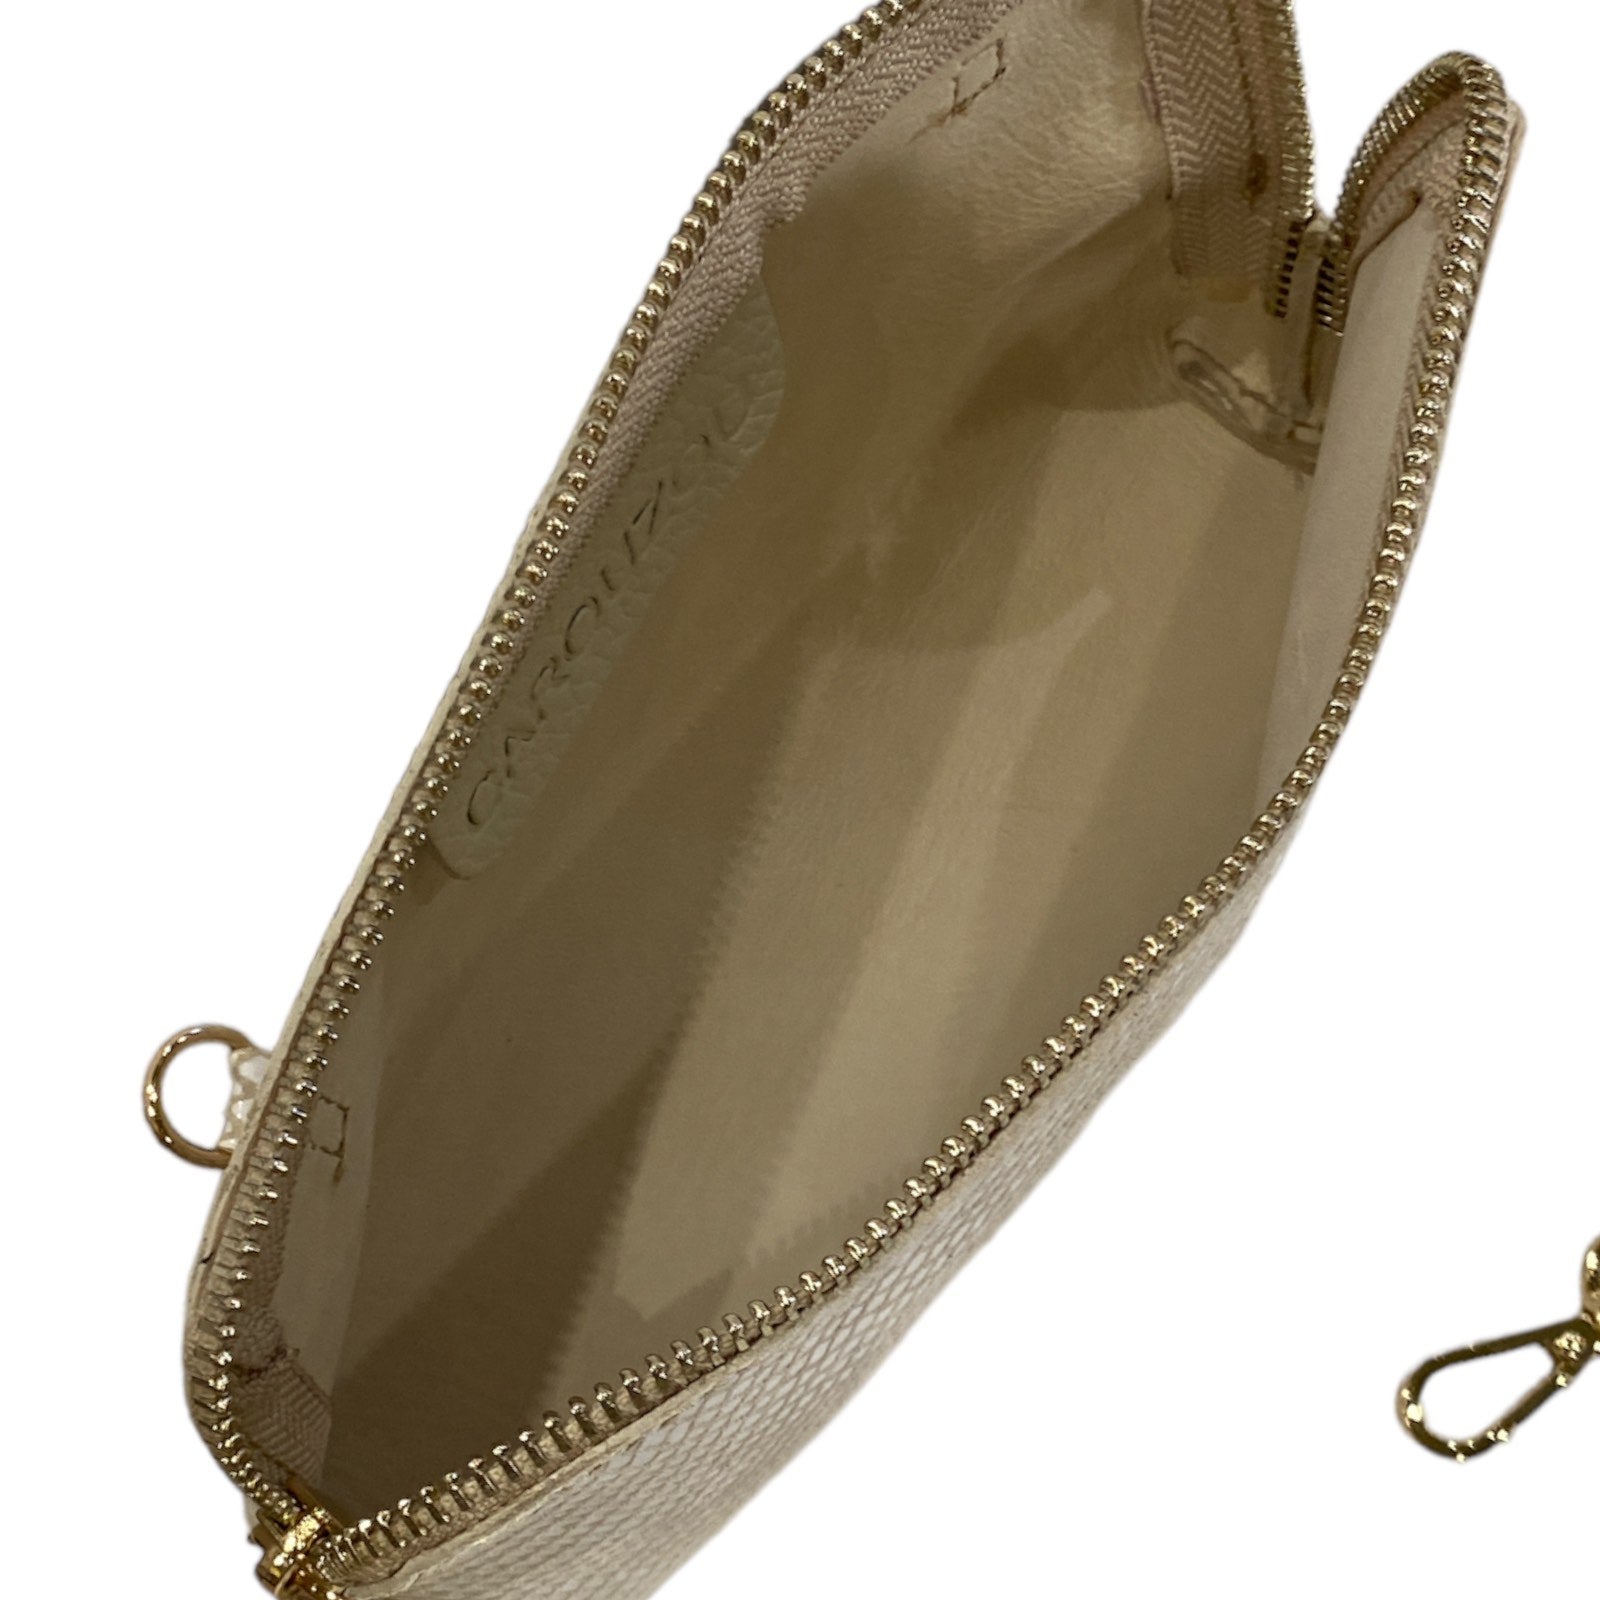 Box L. White mermaid leather messenger bag